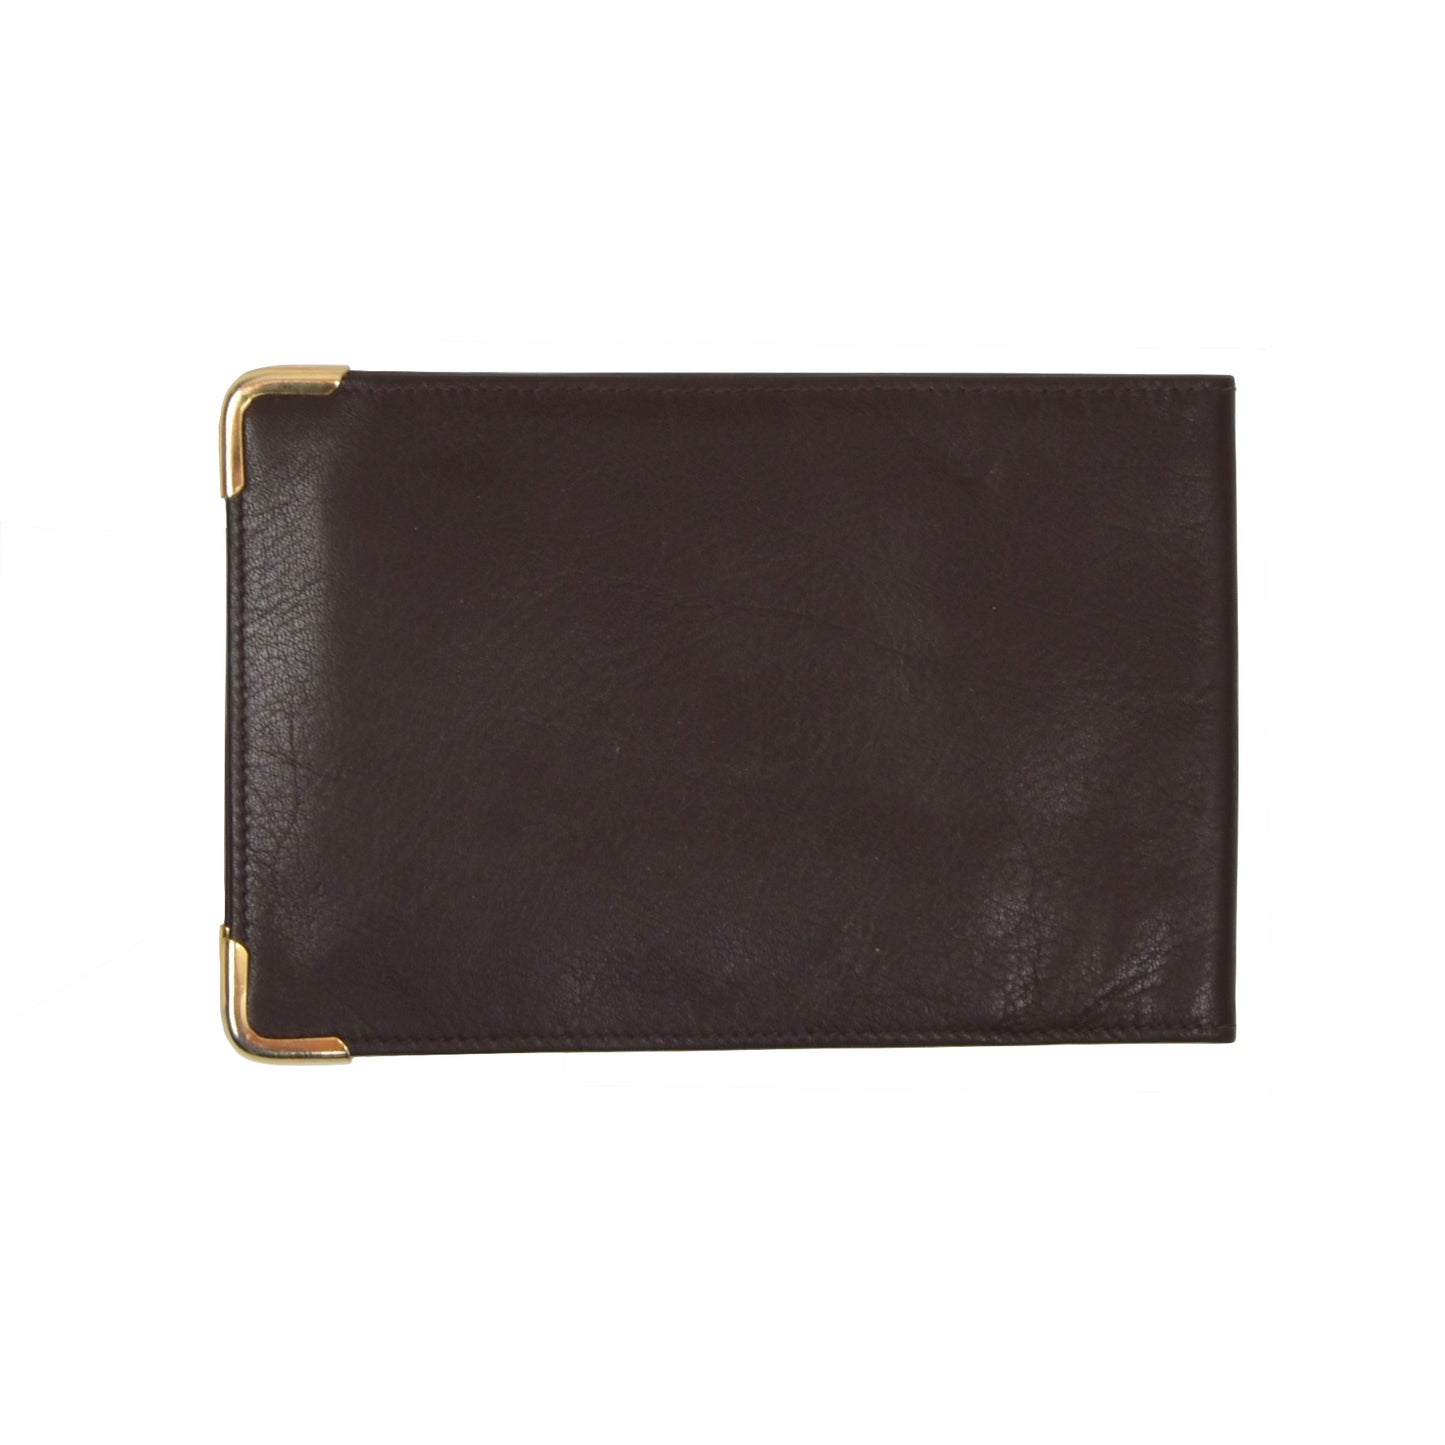 Samsonite Leather Billfold/Wallet - Brown